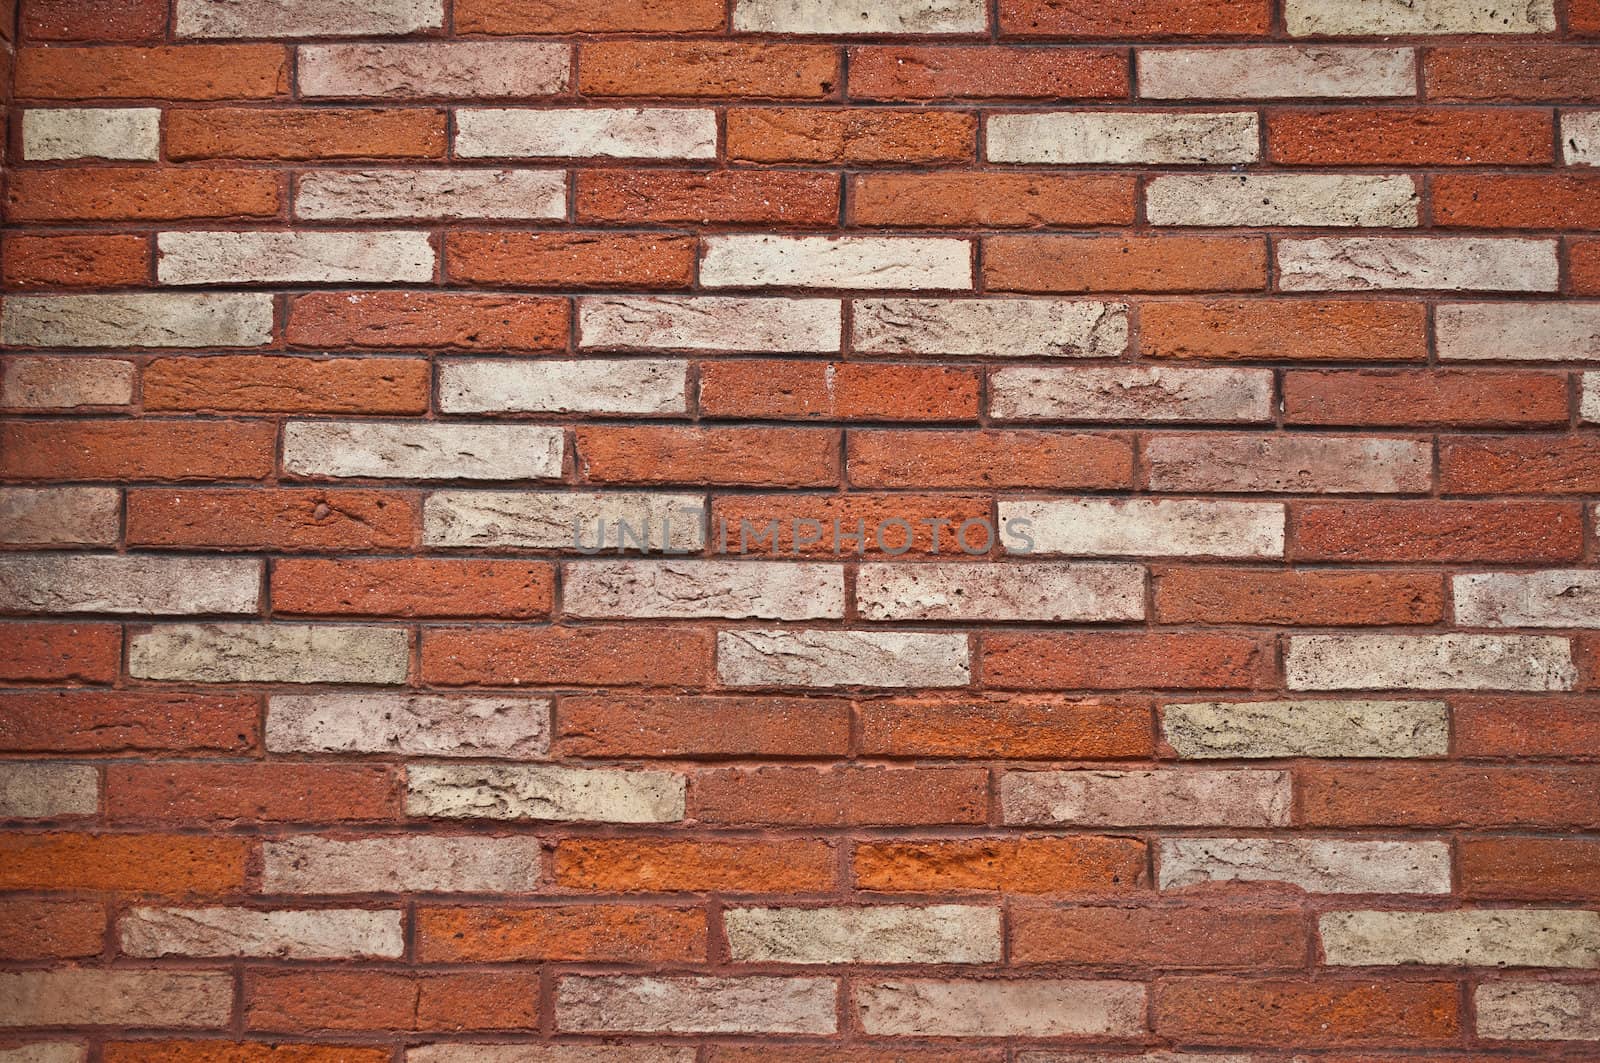 brick texture by NeydtStock